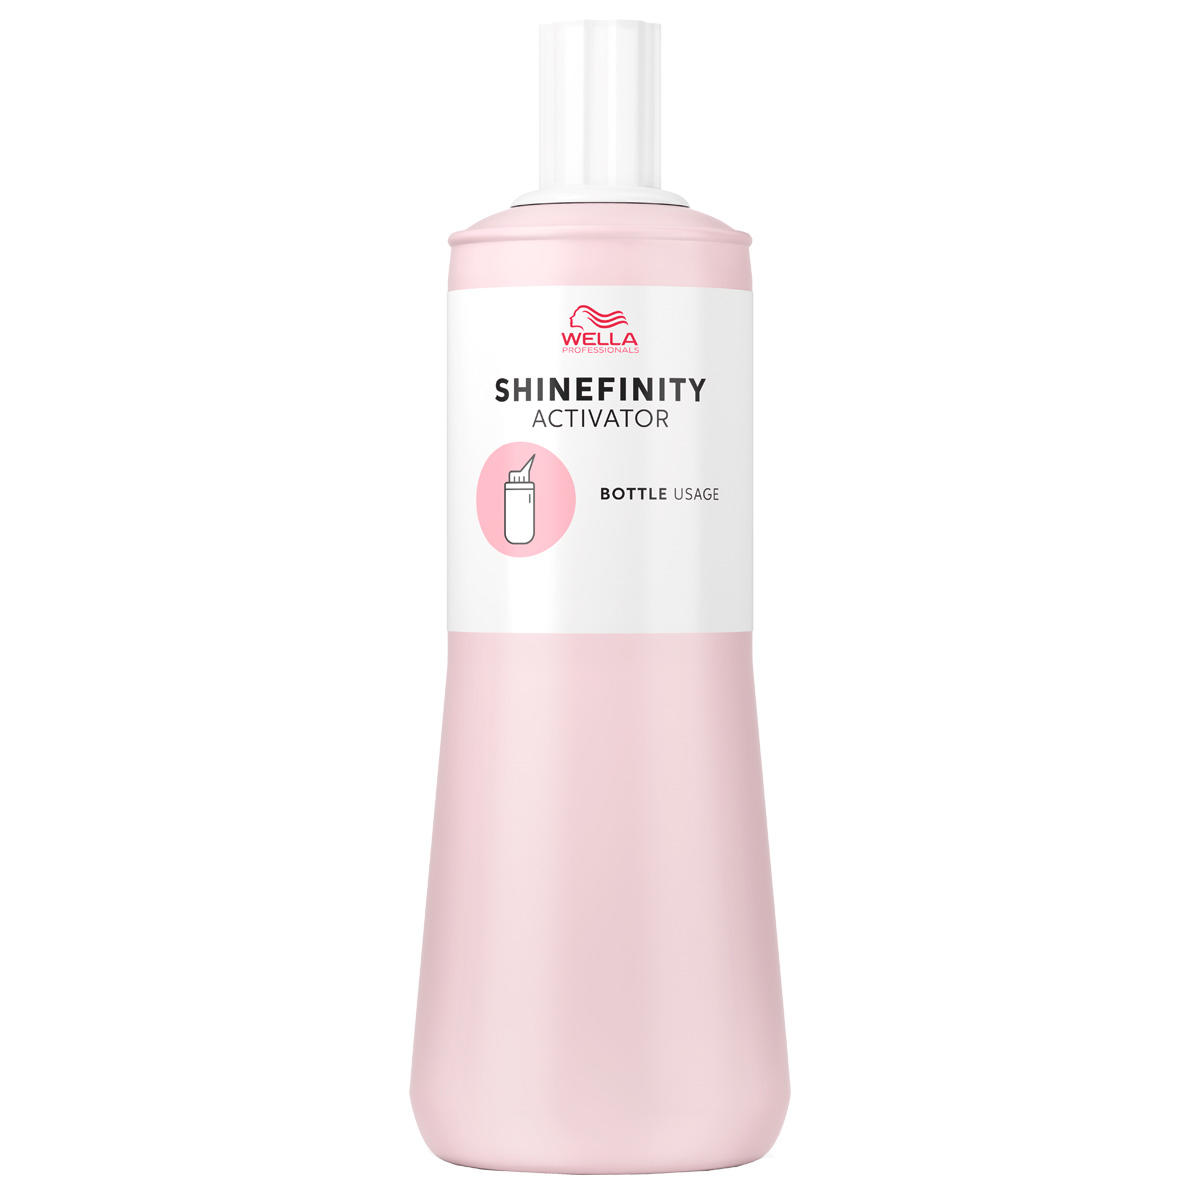 Wella Shinefinity Activator Bottle 1 Liter - 1